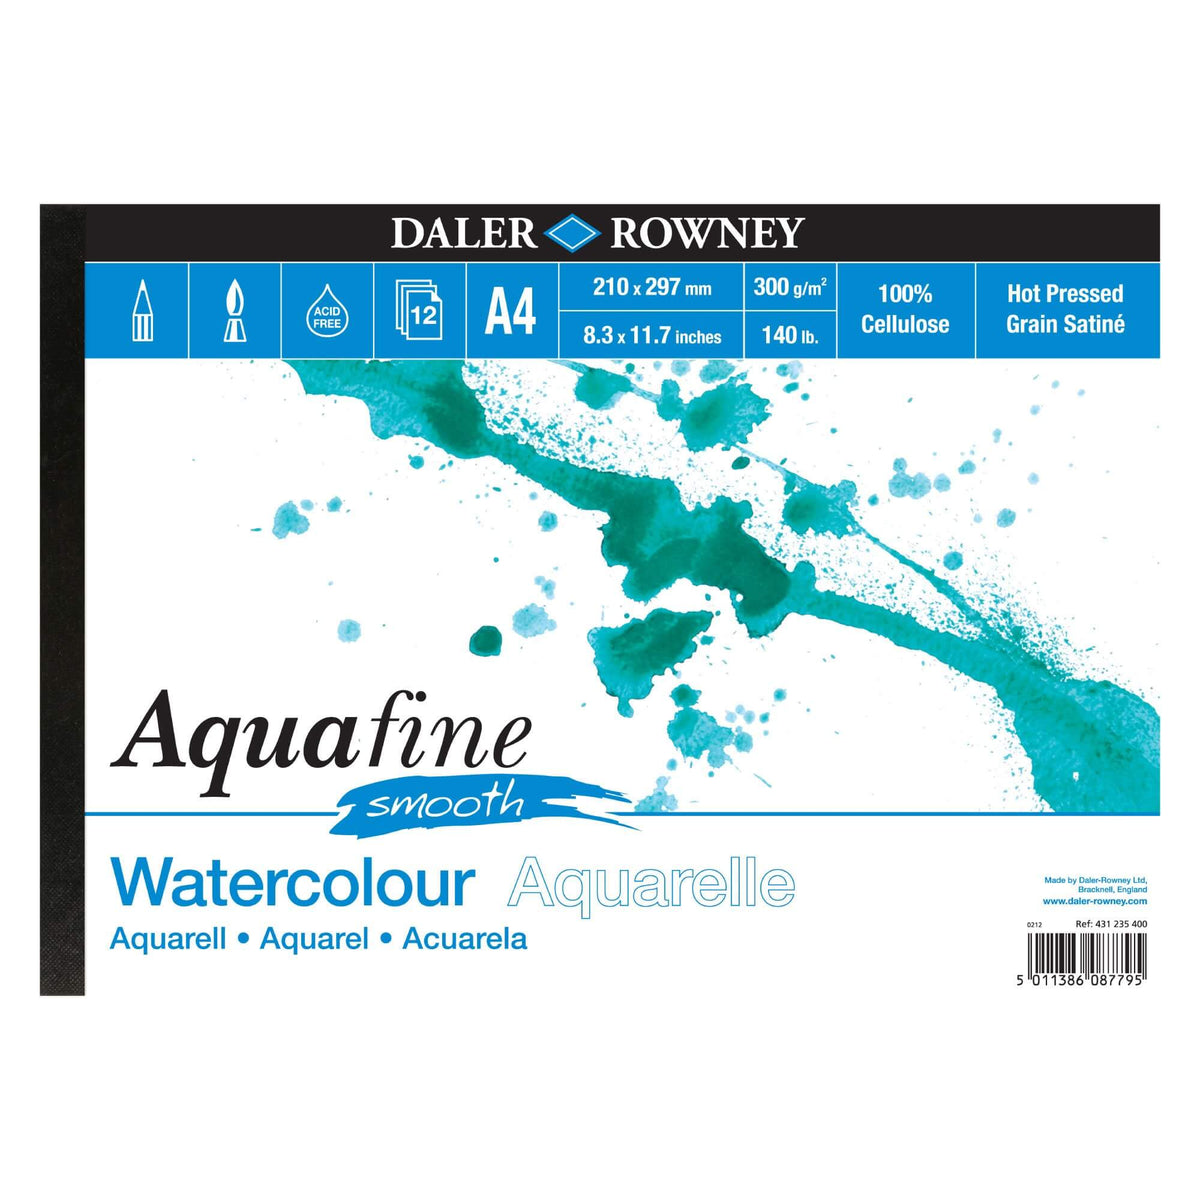 Daler-Rowney Aquafine Watercolour Pads - 300gsm (140lb) - HOT PRESSED